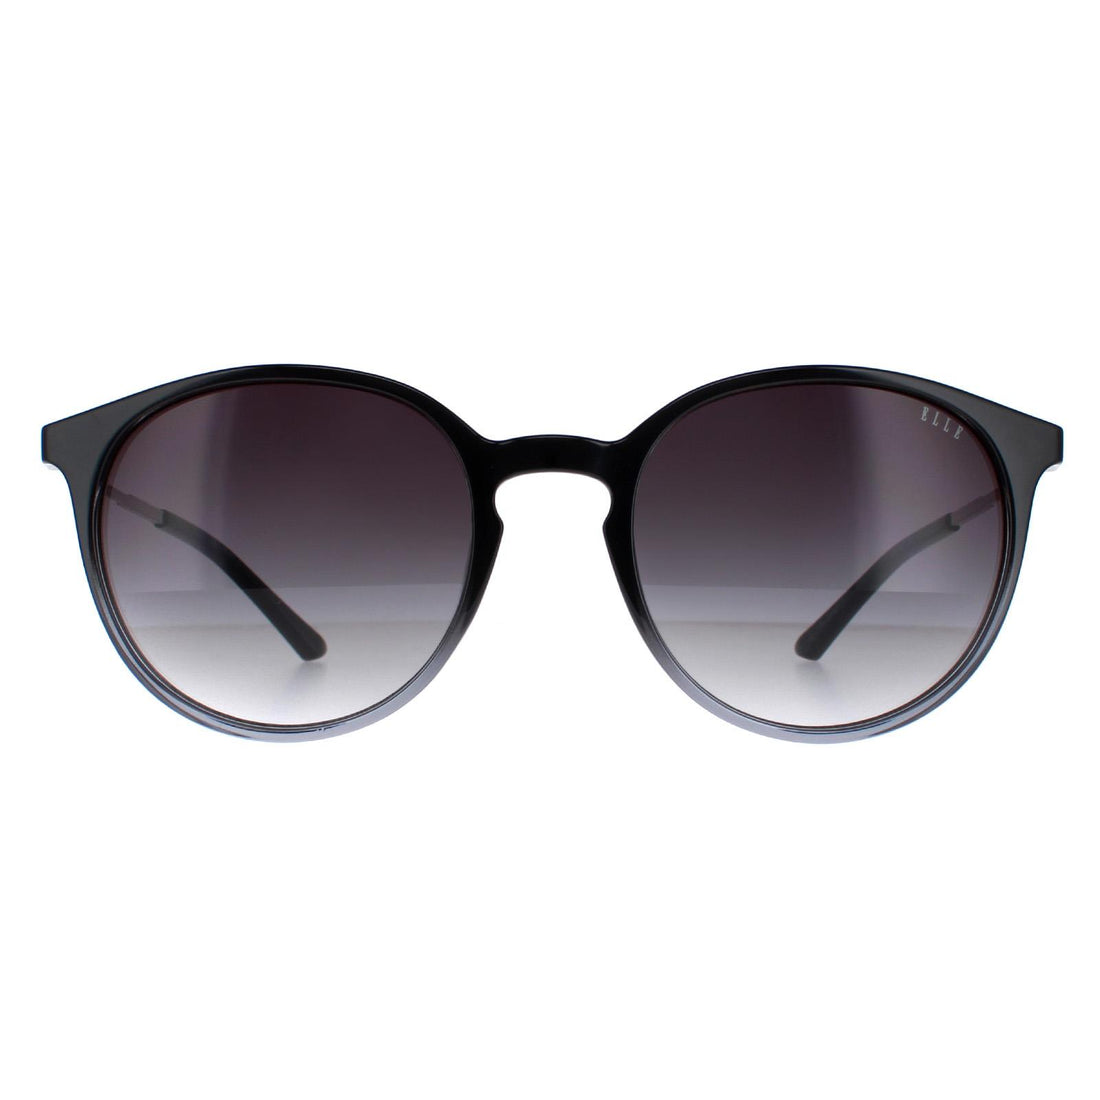 Elle 14877 Sunglasses Black / Grey Gradient